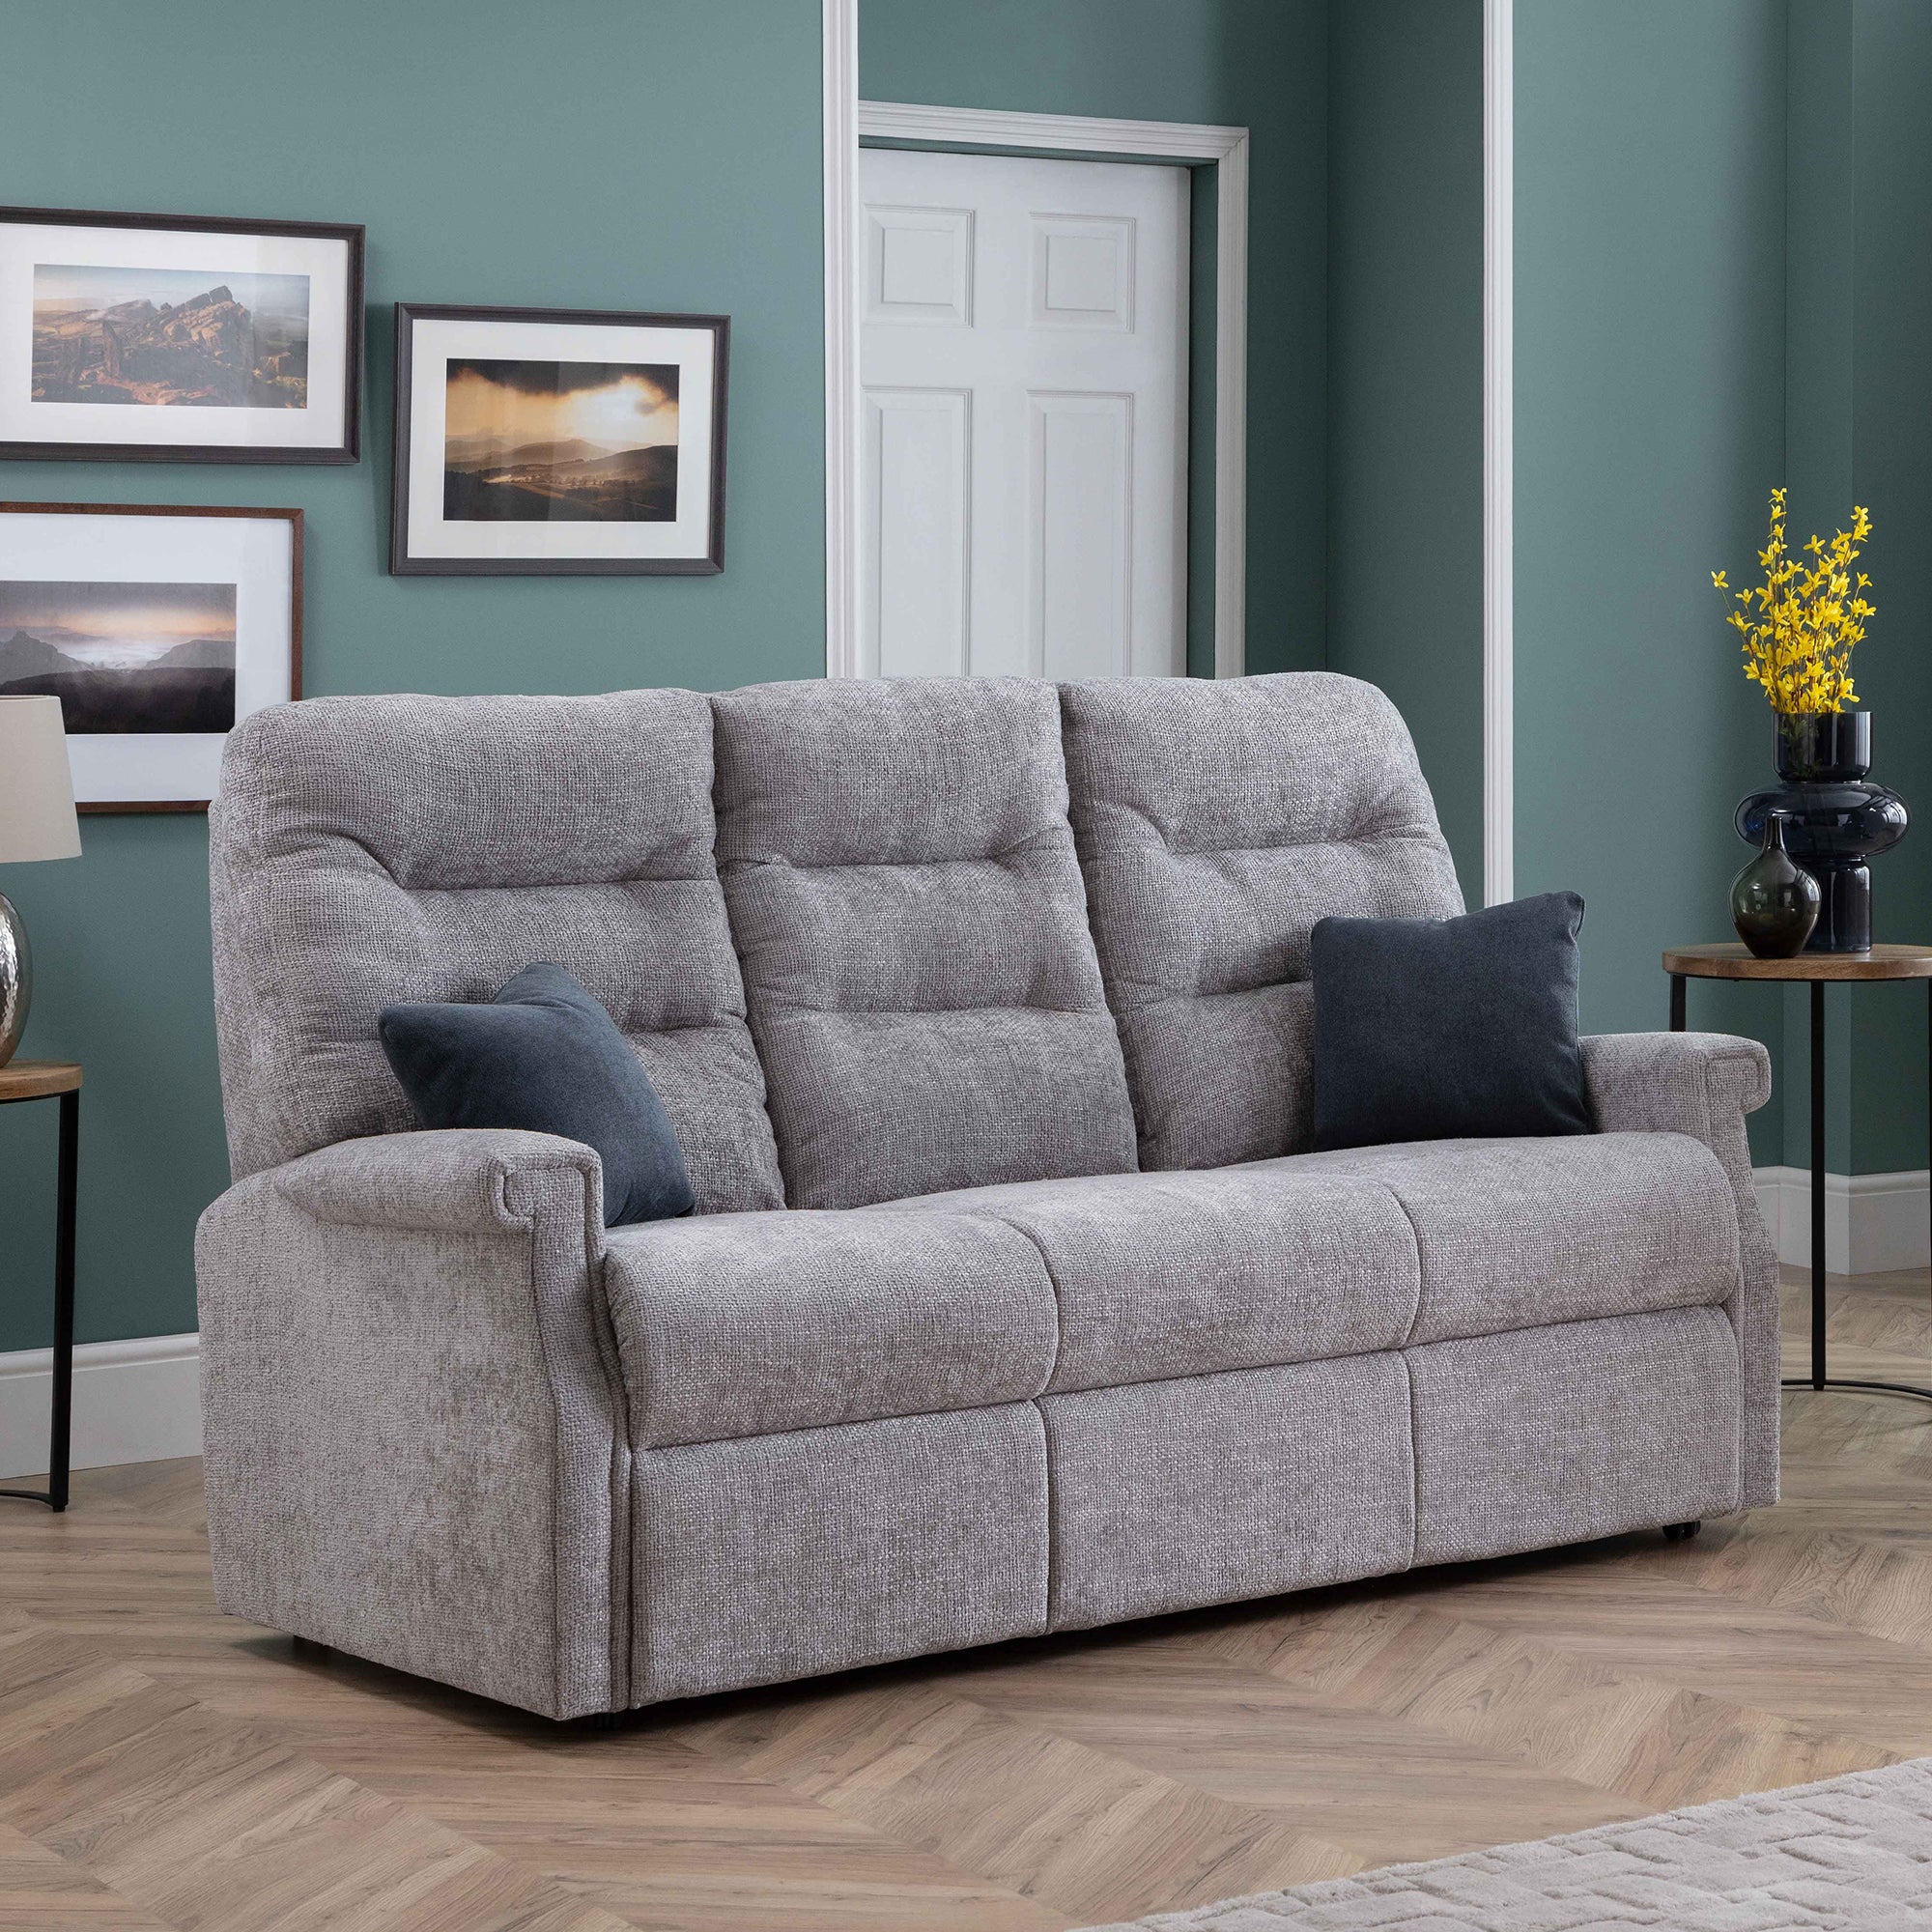 Lansdowne - Fixed 3 Seat Split Sofa In Fabric